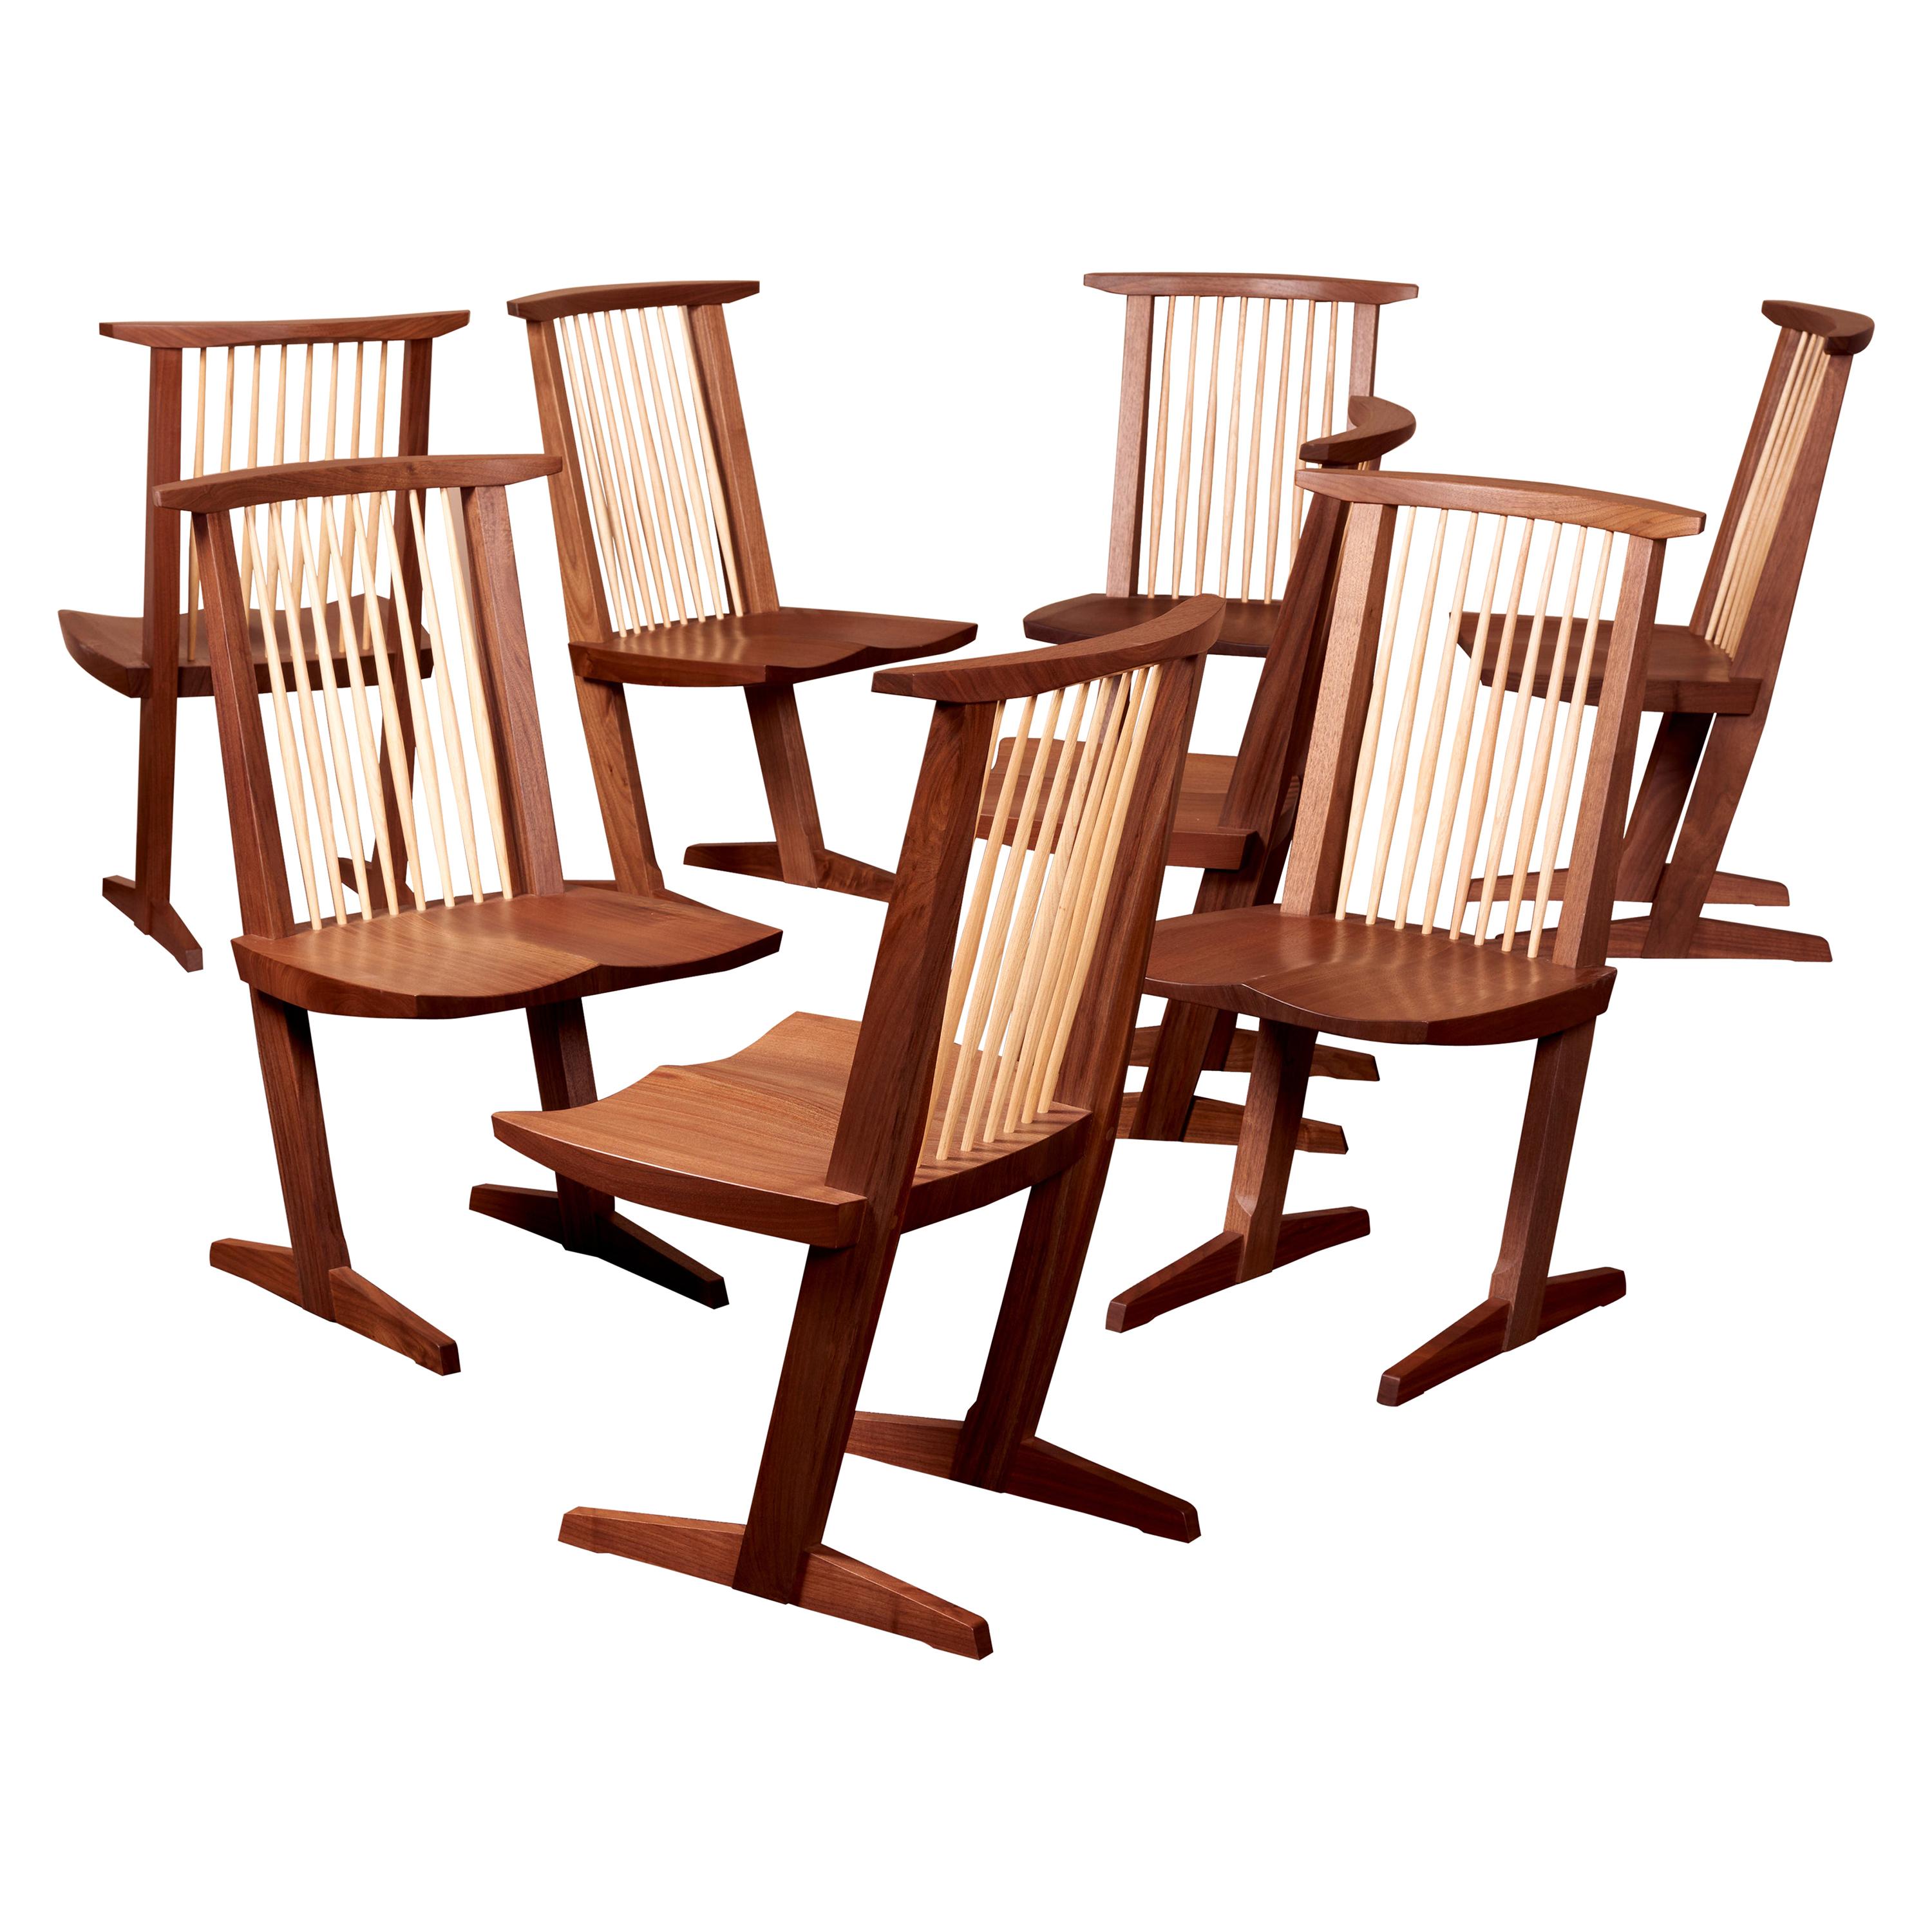 8 Conoid Dining Chairs by Mira Nakashima based on a George Nakashima design